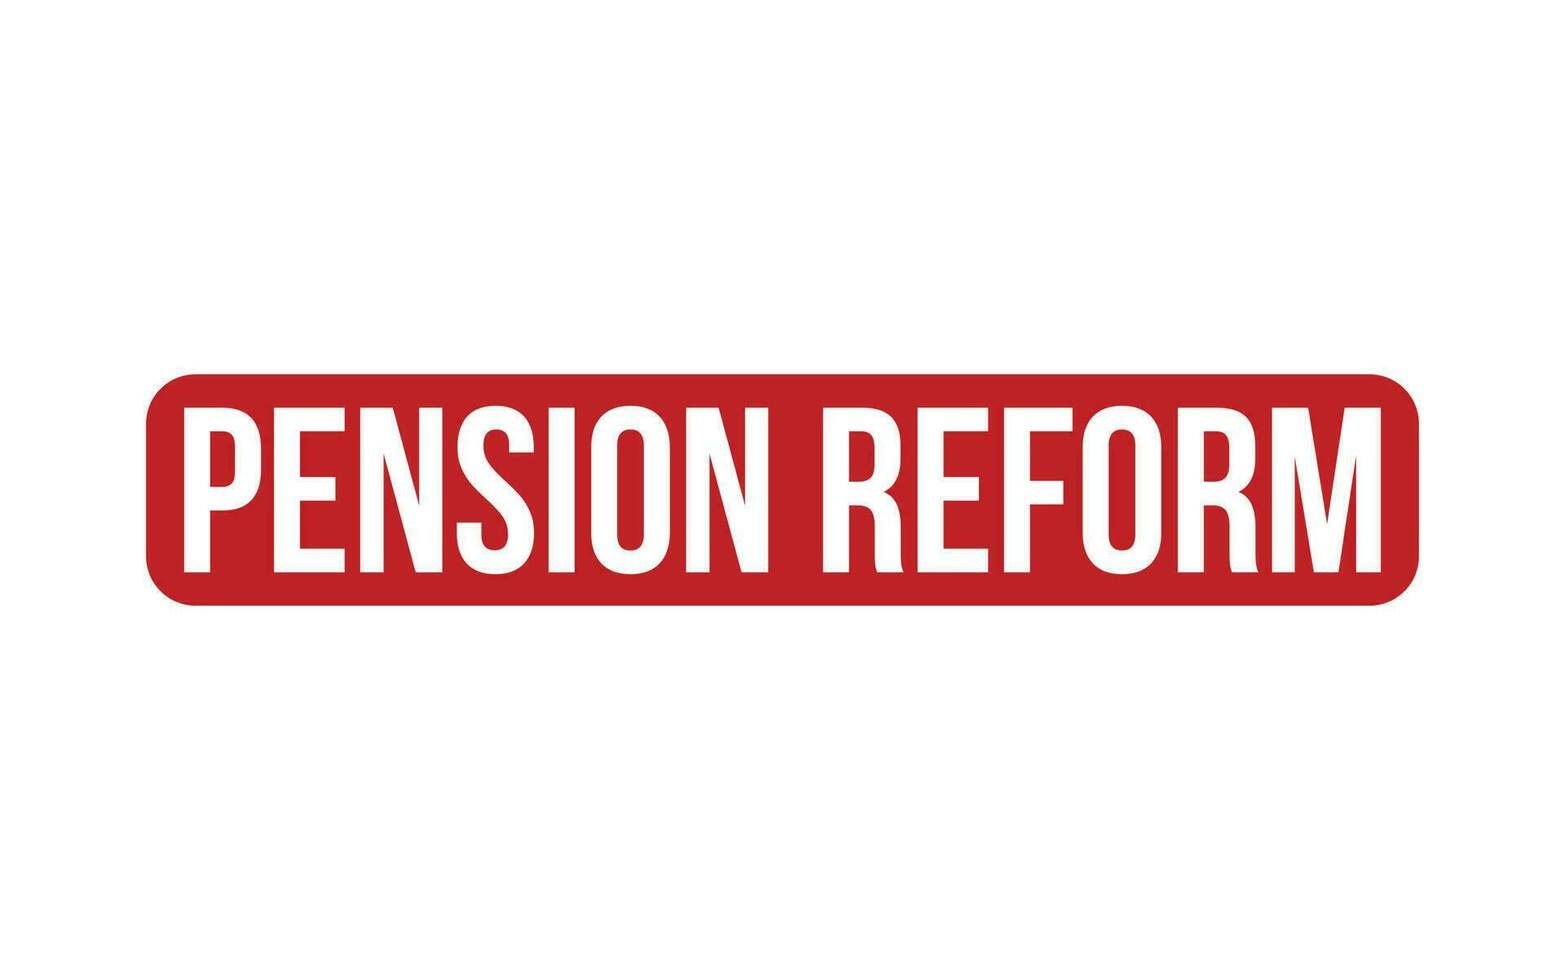 pensión reforma caucho sello sello vector